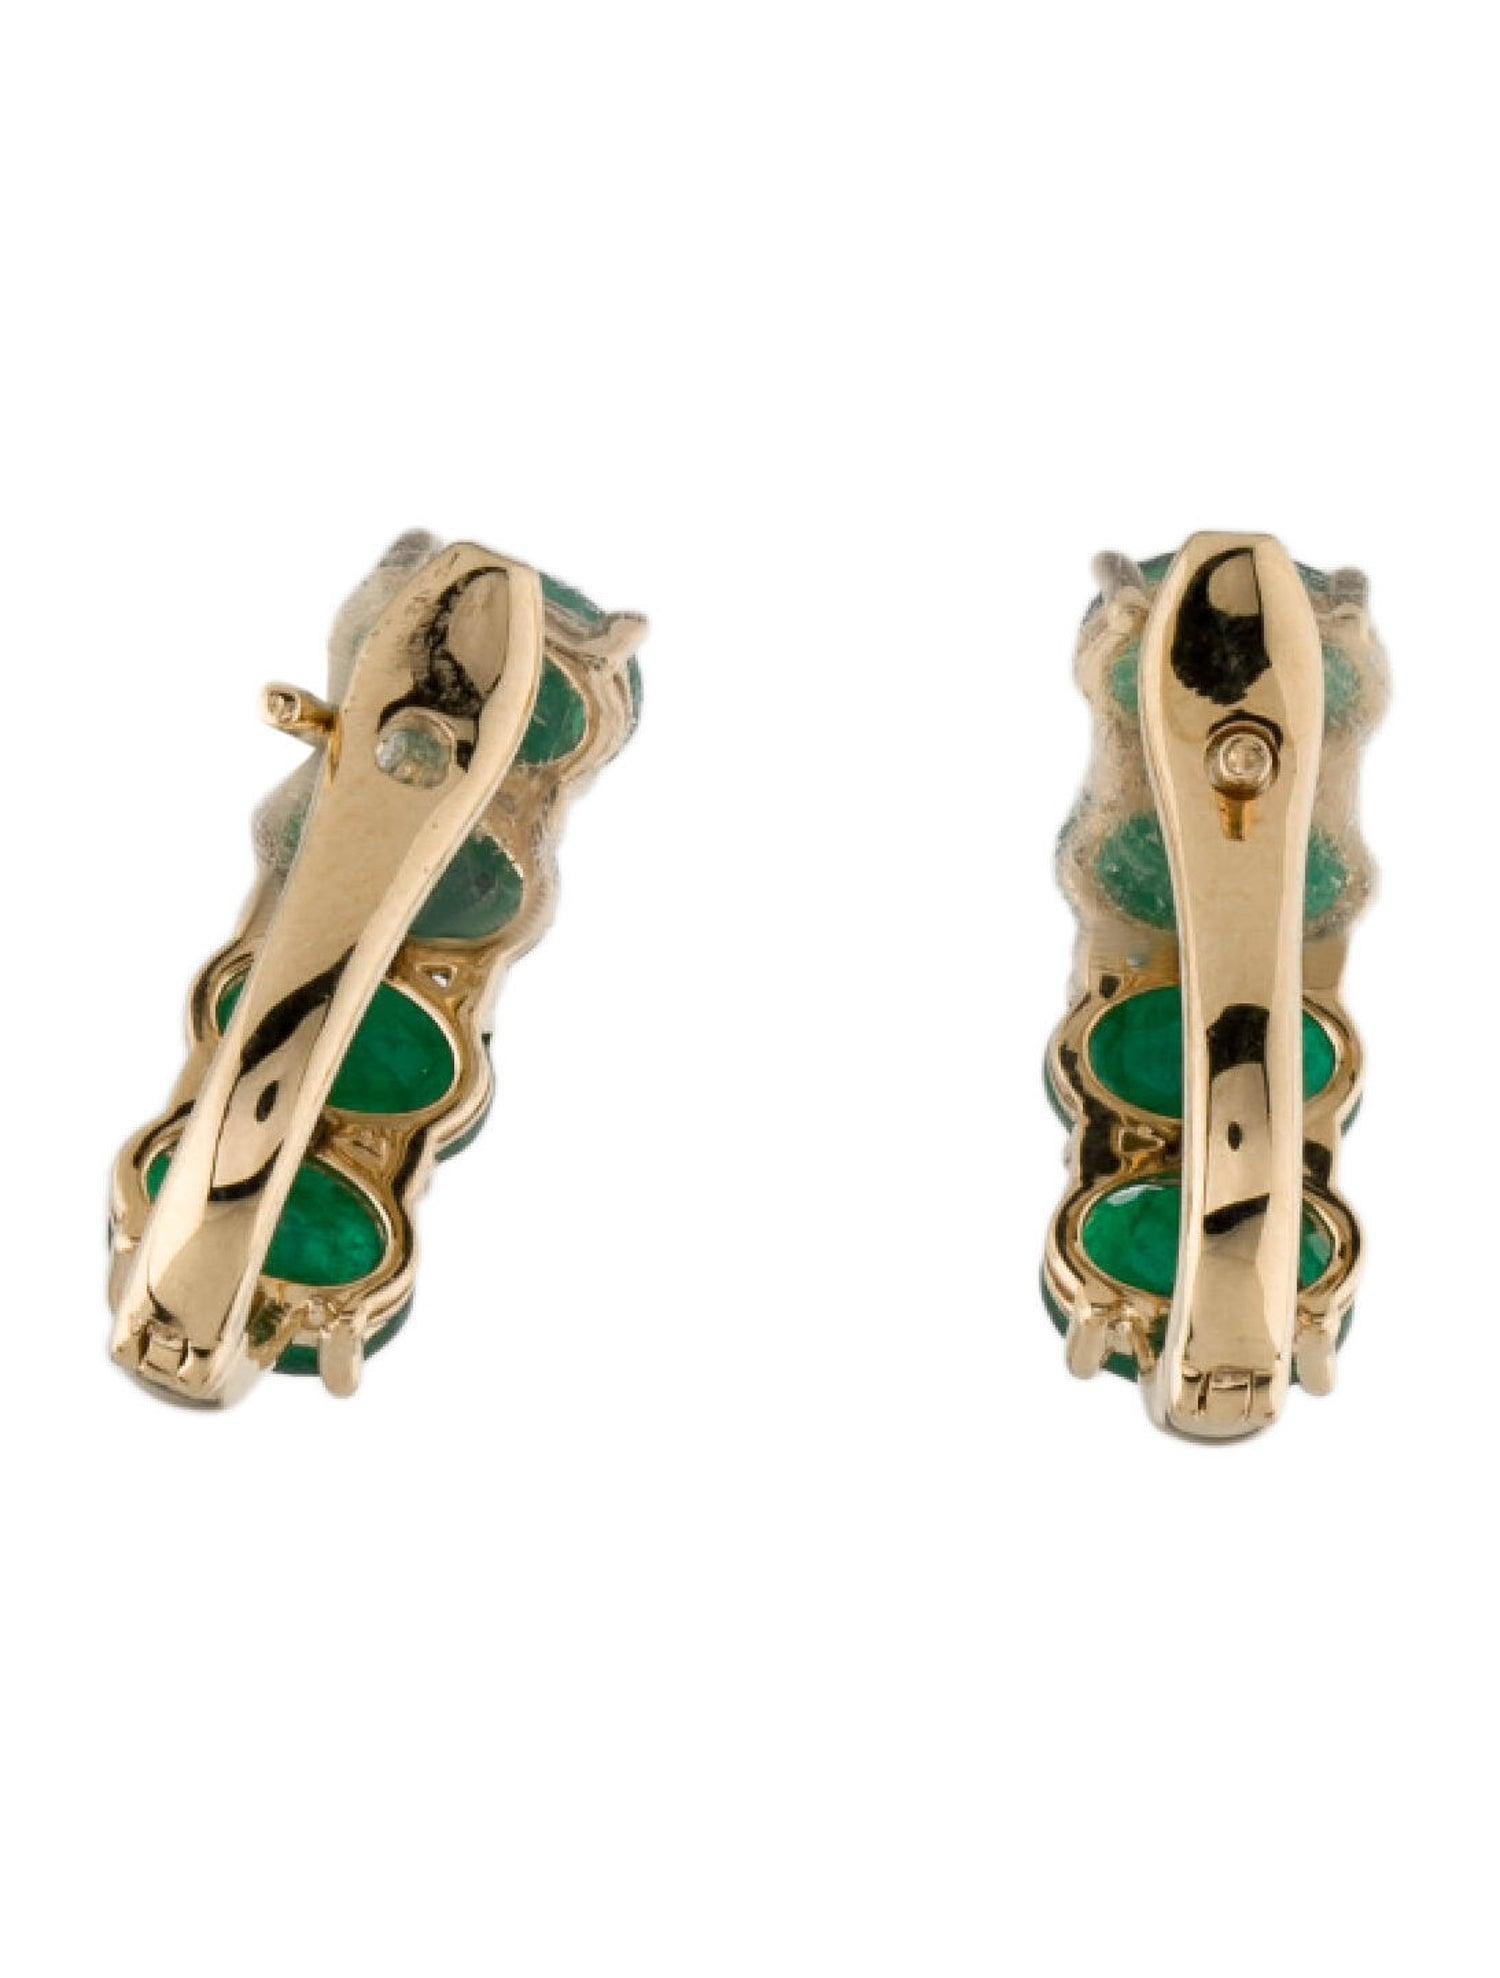 Brilliant Cut 14K Emerald Earclip Earrings - 2.35ctw, Elegant Gemstone Jewelry, Classic Style For Sale